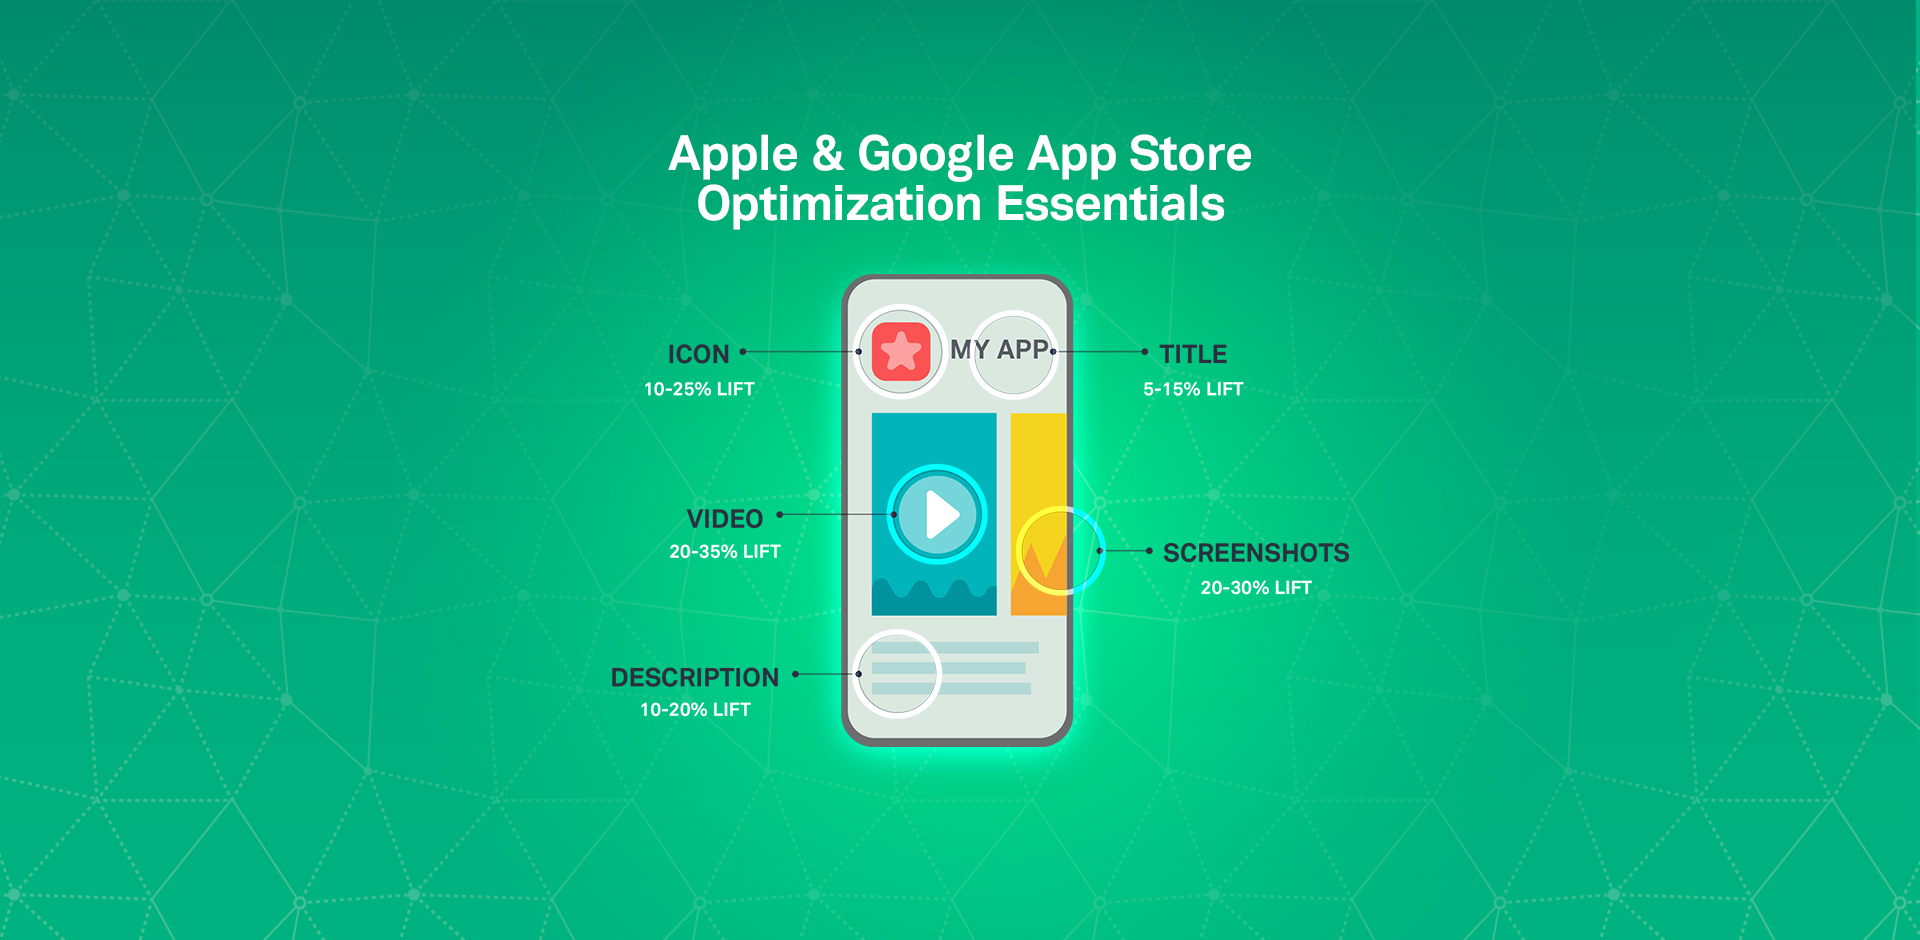 Apple & Google App Store Optimization Essentials